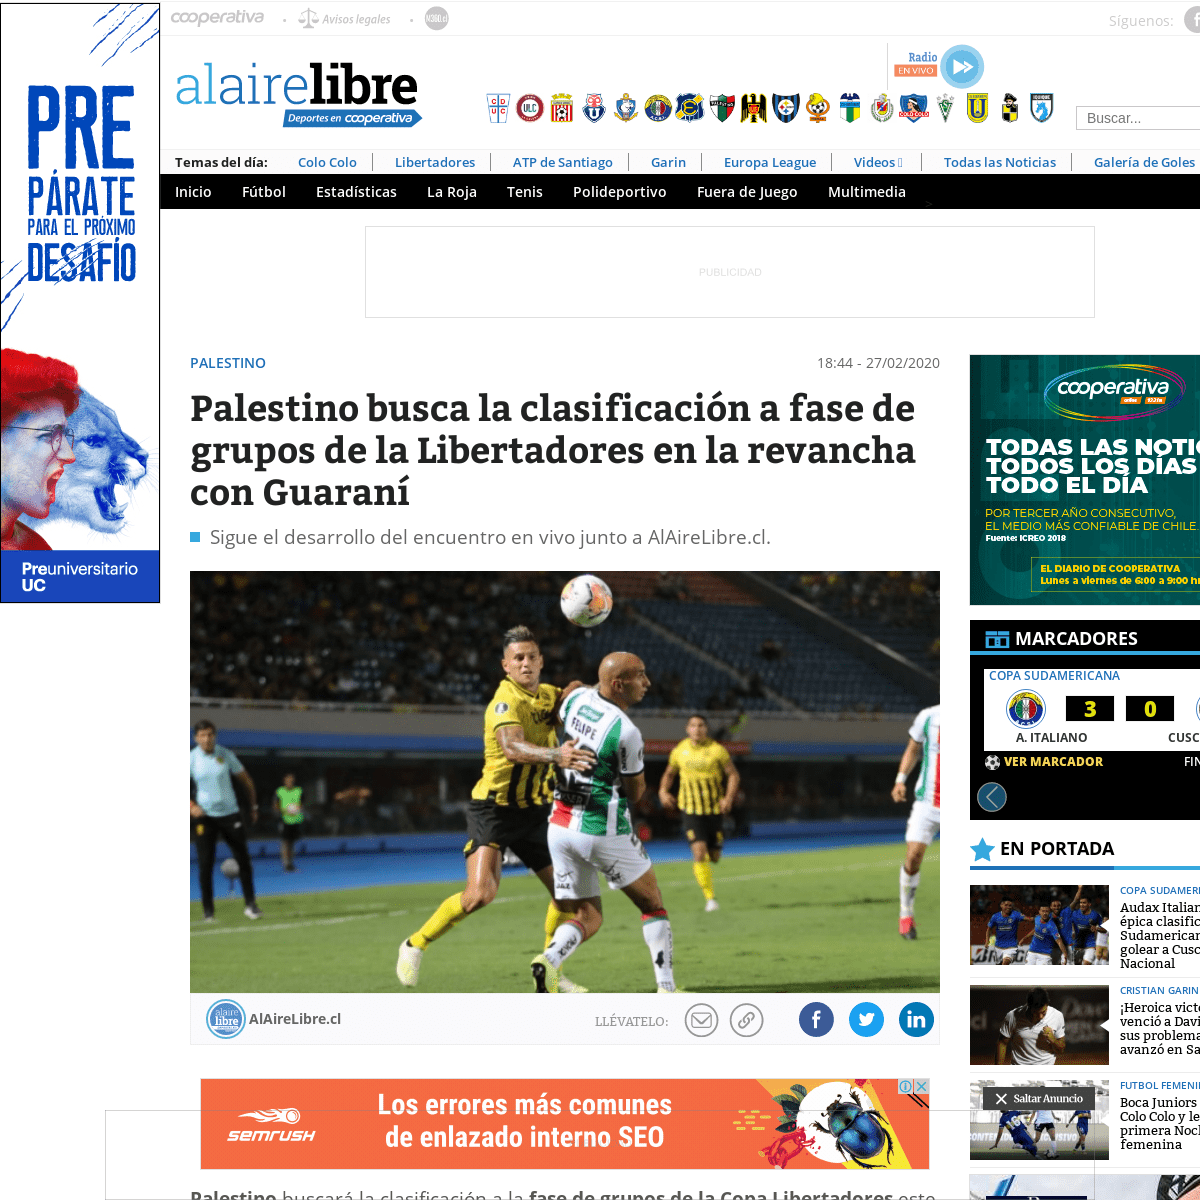 A complete backup of www.alairelibre.cl/noticias/deportes/copa-libertadores/palestino/palestino-busca-la-clasificacion-a-fase-de